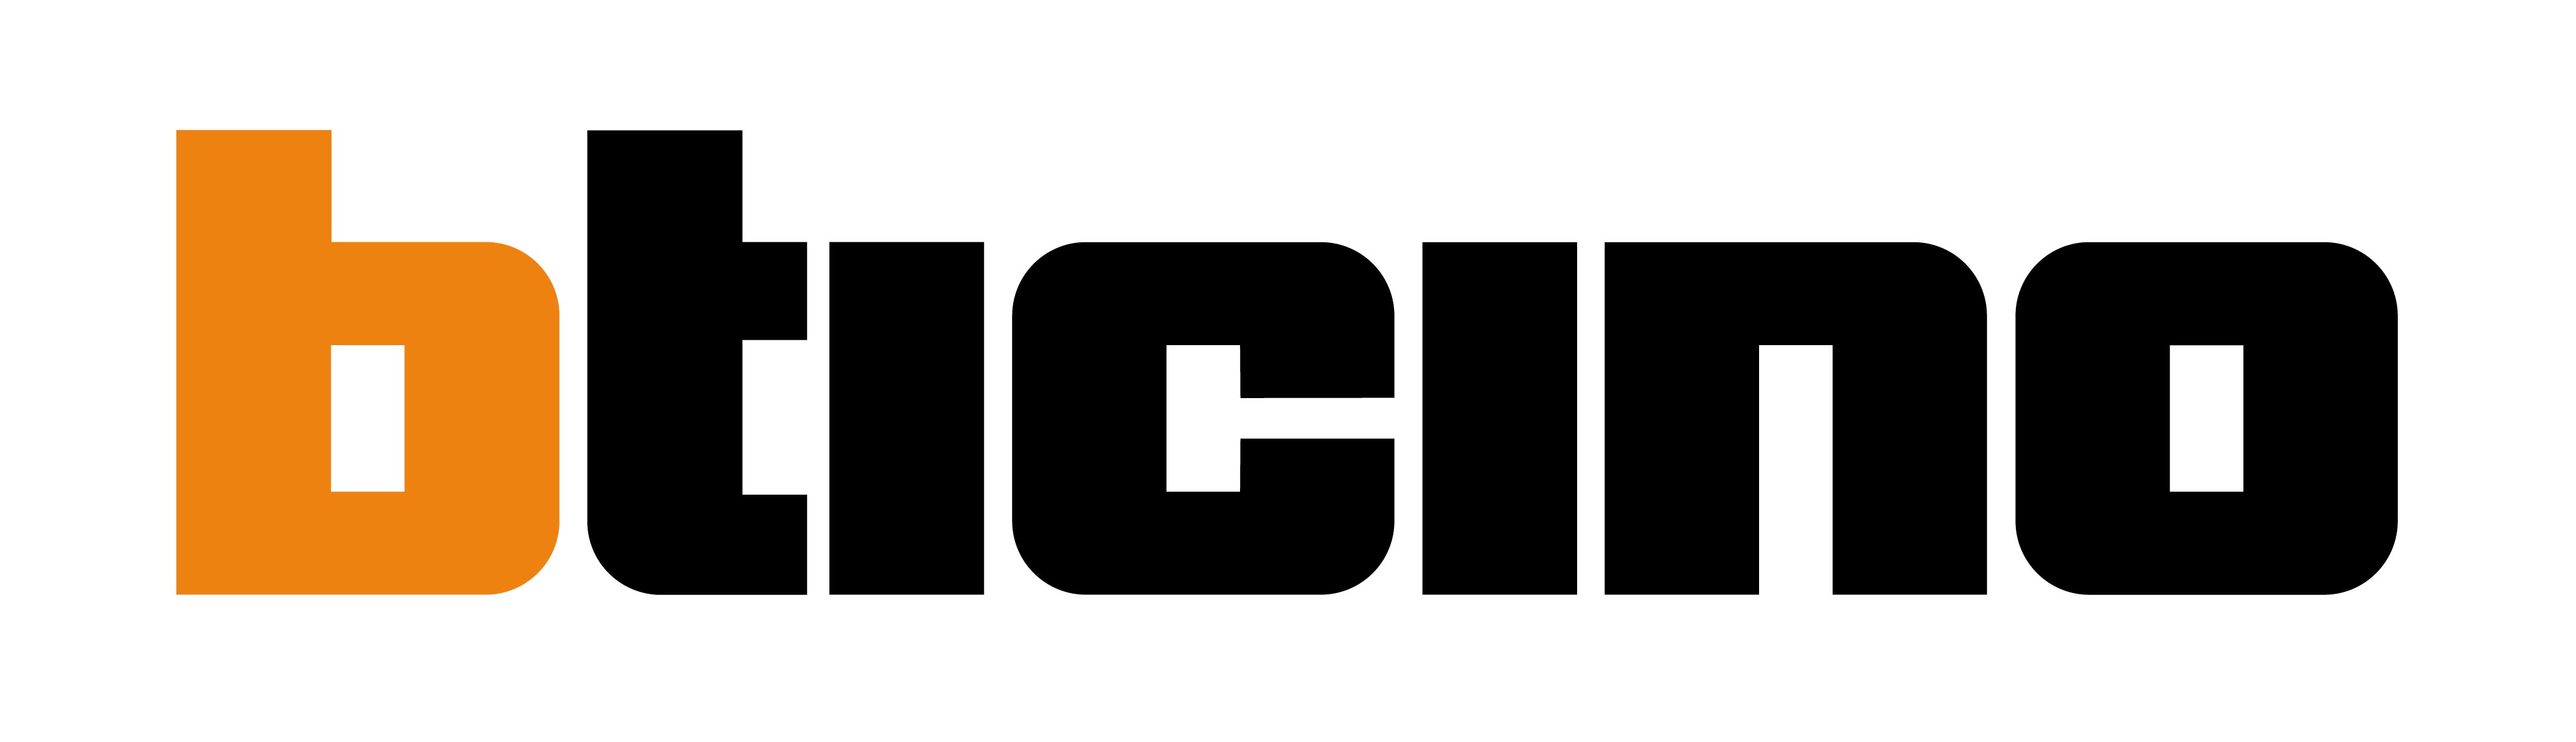 Bticino_Logo